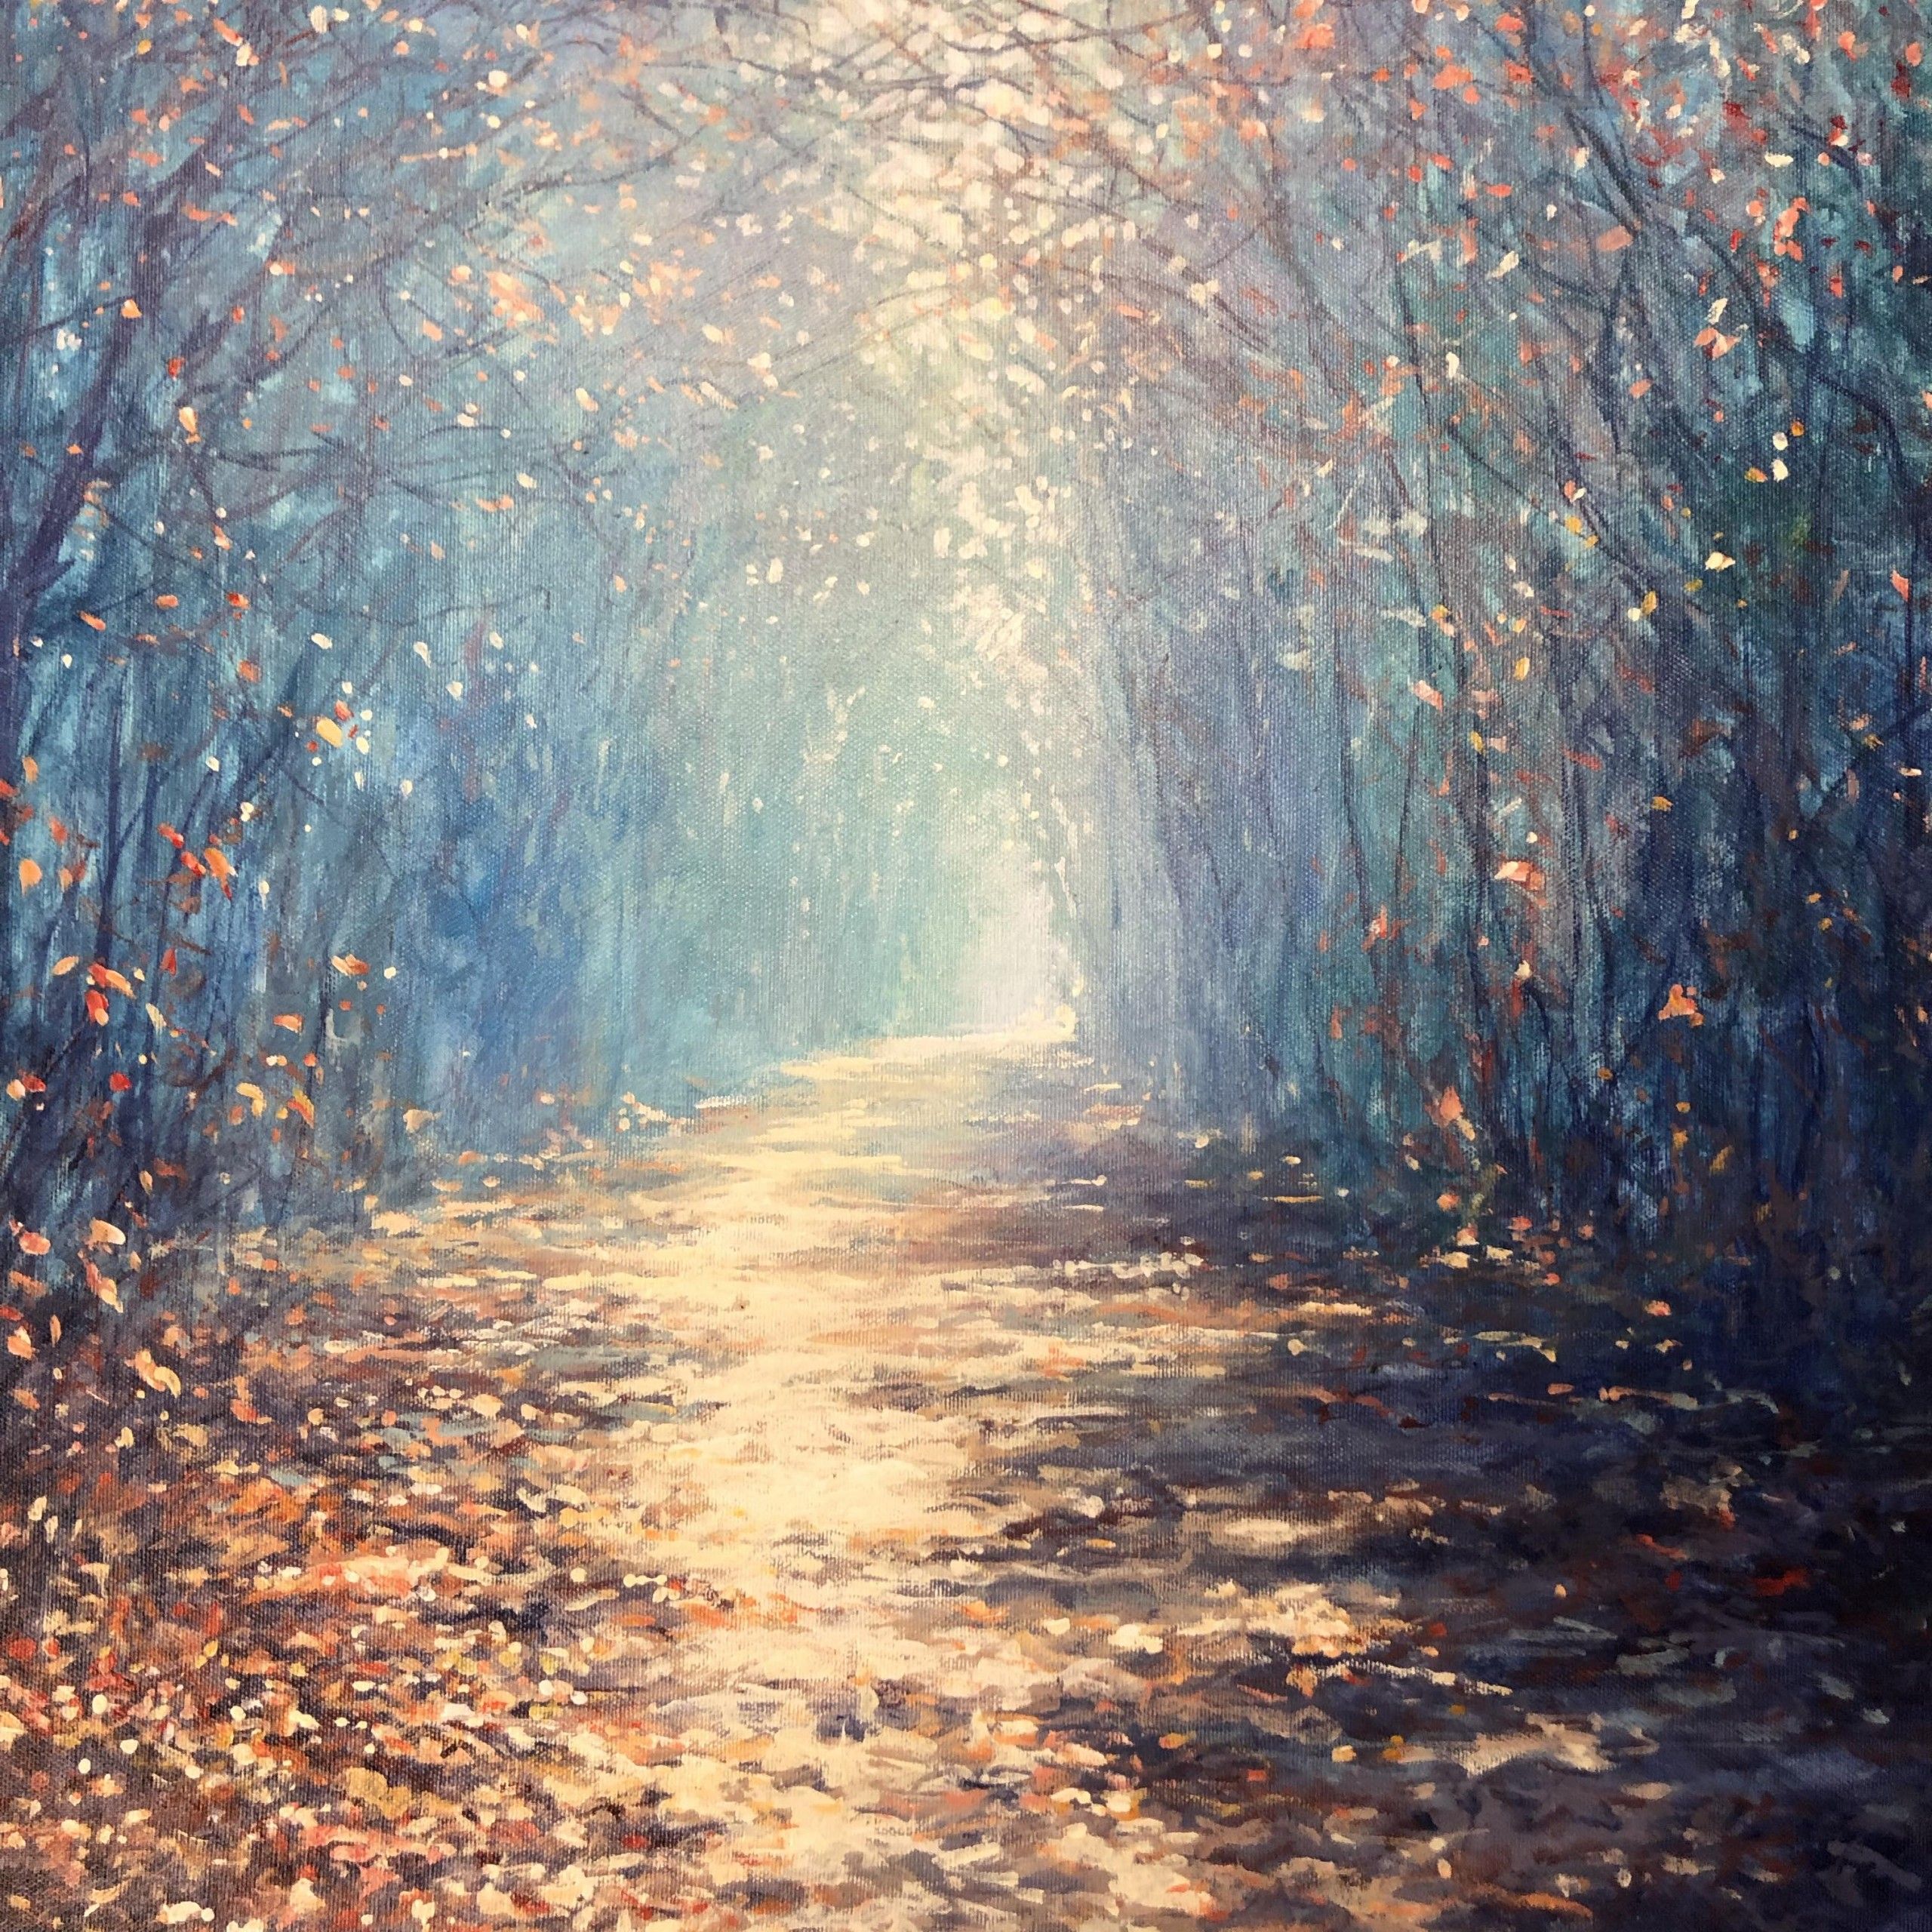 Enchanted Forest in Blue by Mariusz Kaldowski